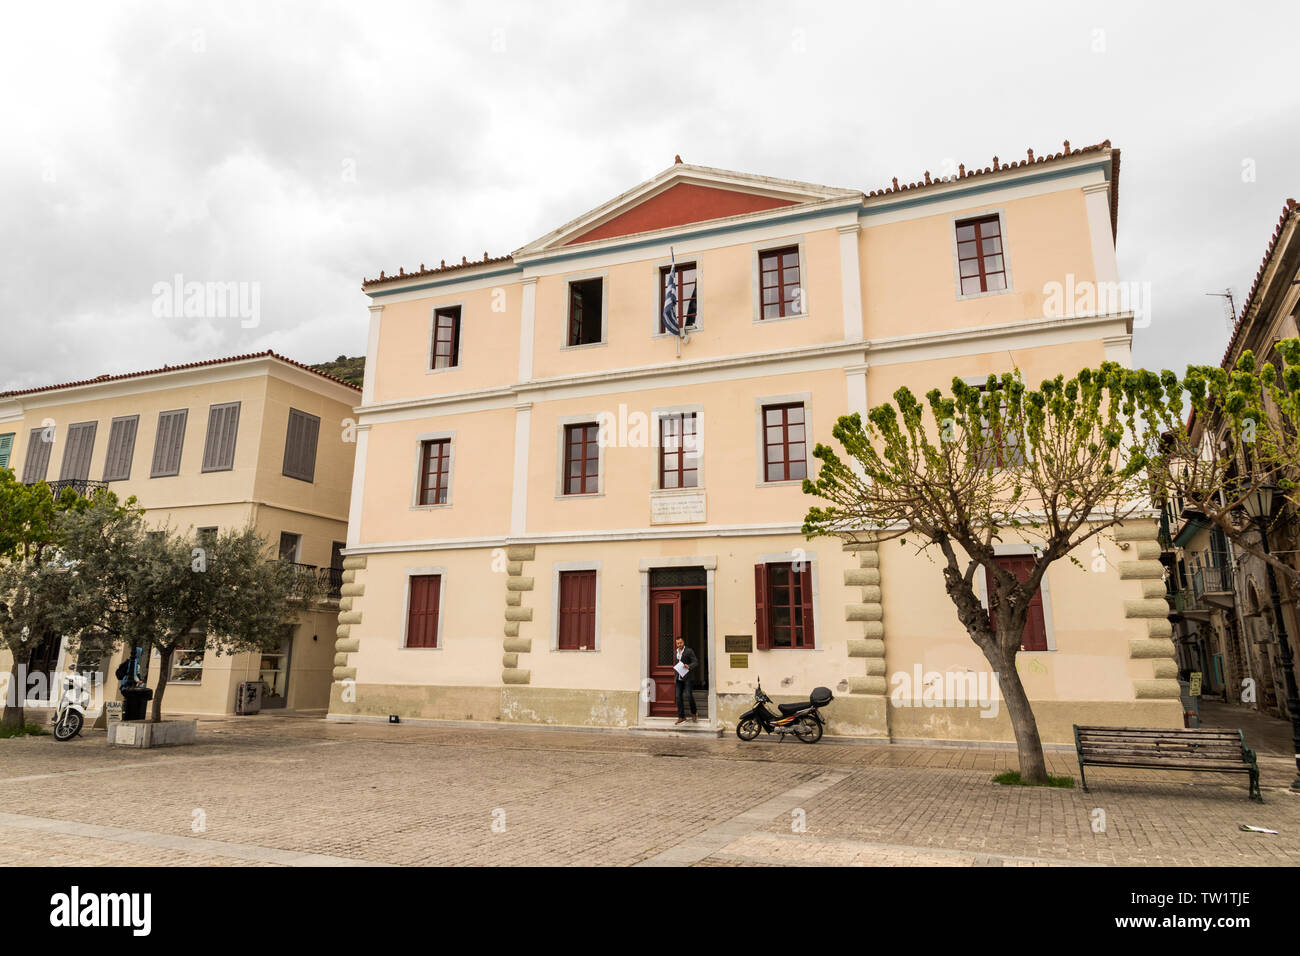 Nafplio, Greece. The Town Hall building in Platia Trion Navarchon (Three Admirals' Square) Stock Photo